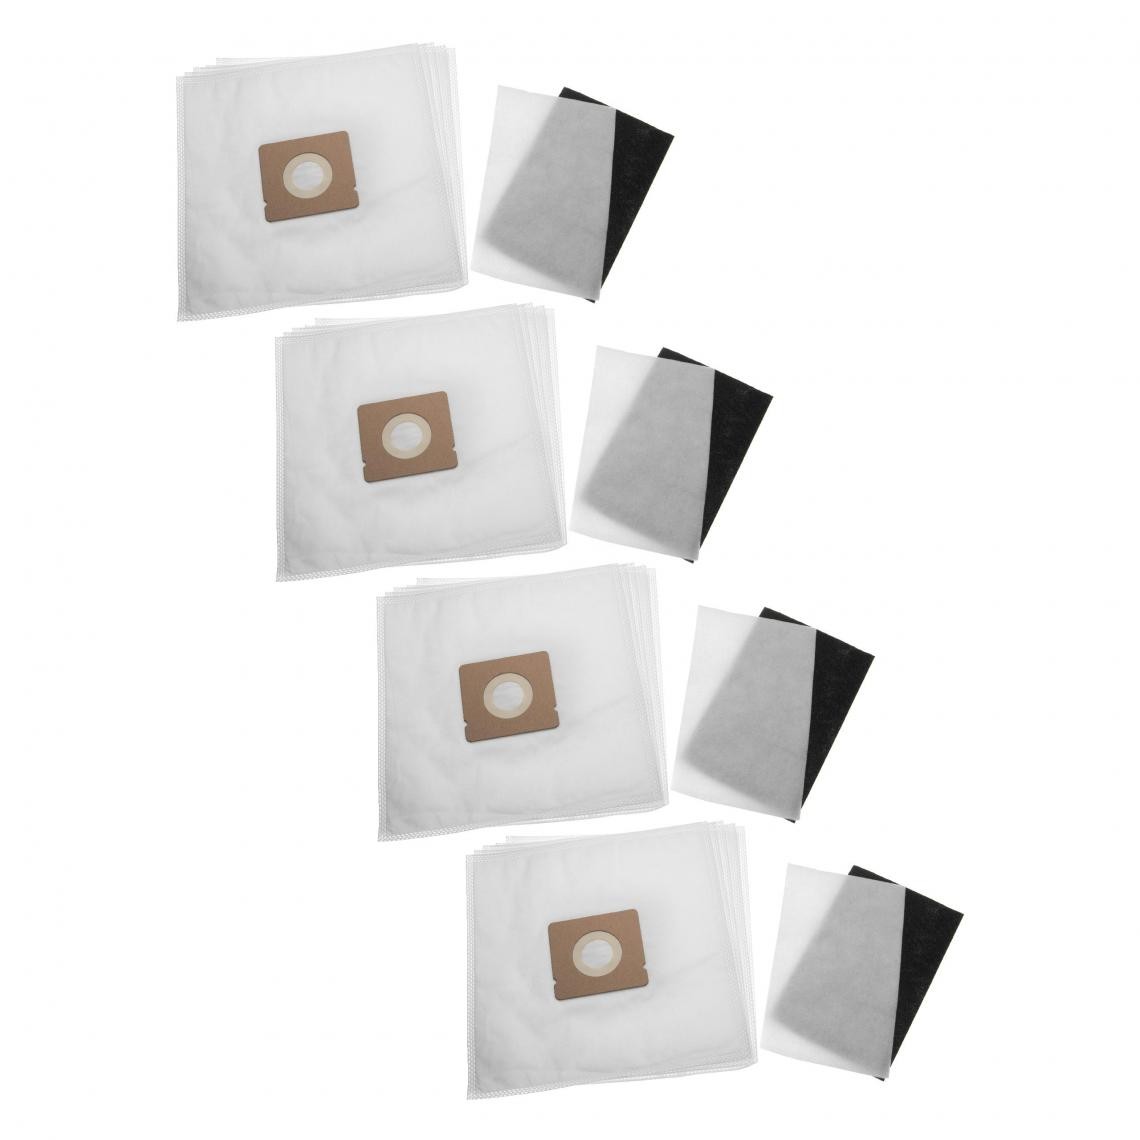 Vhbw - vhbw Lot de sacs (microfibres non tissées) + filtre avec 24 pièces compatible avec Rowenta RO2455, RO2455WA, RO2465, RO2465WA, RO2611 aspirateur - Accessoire entretien des sols